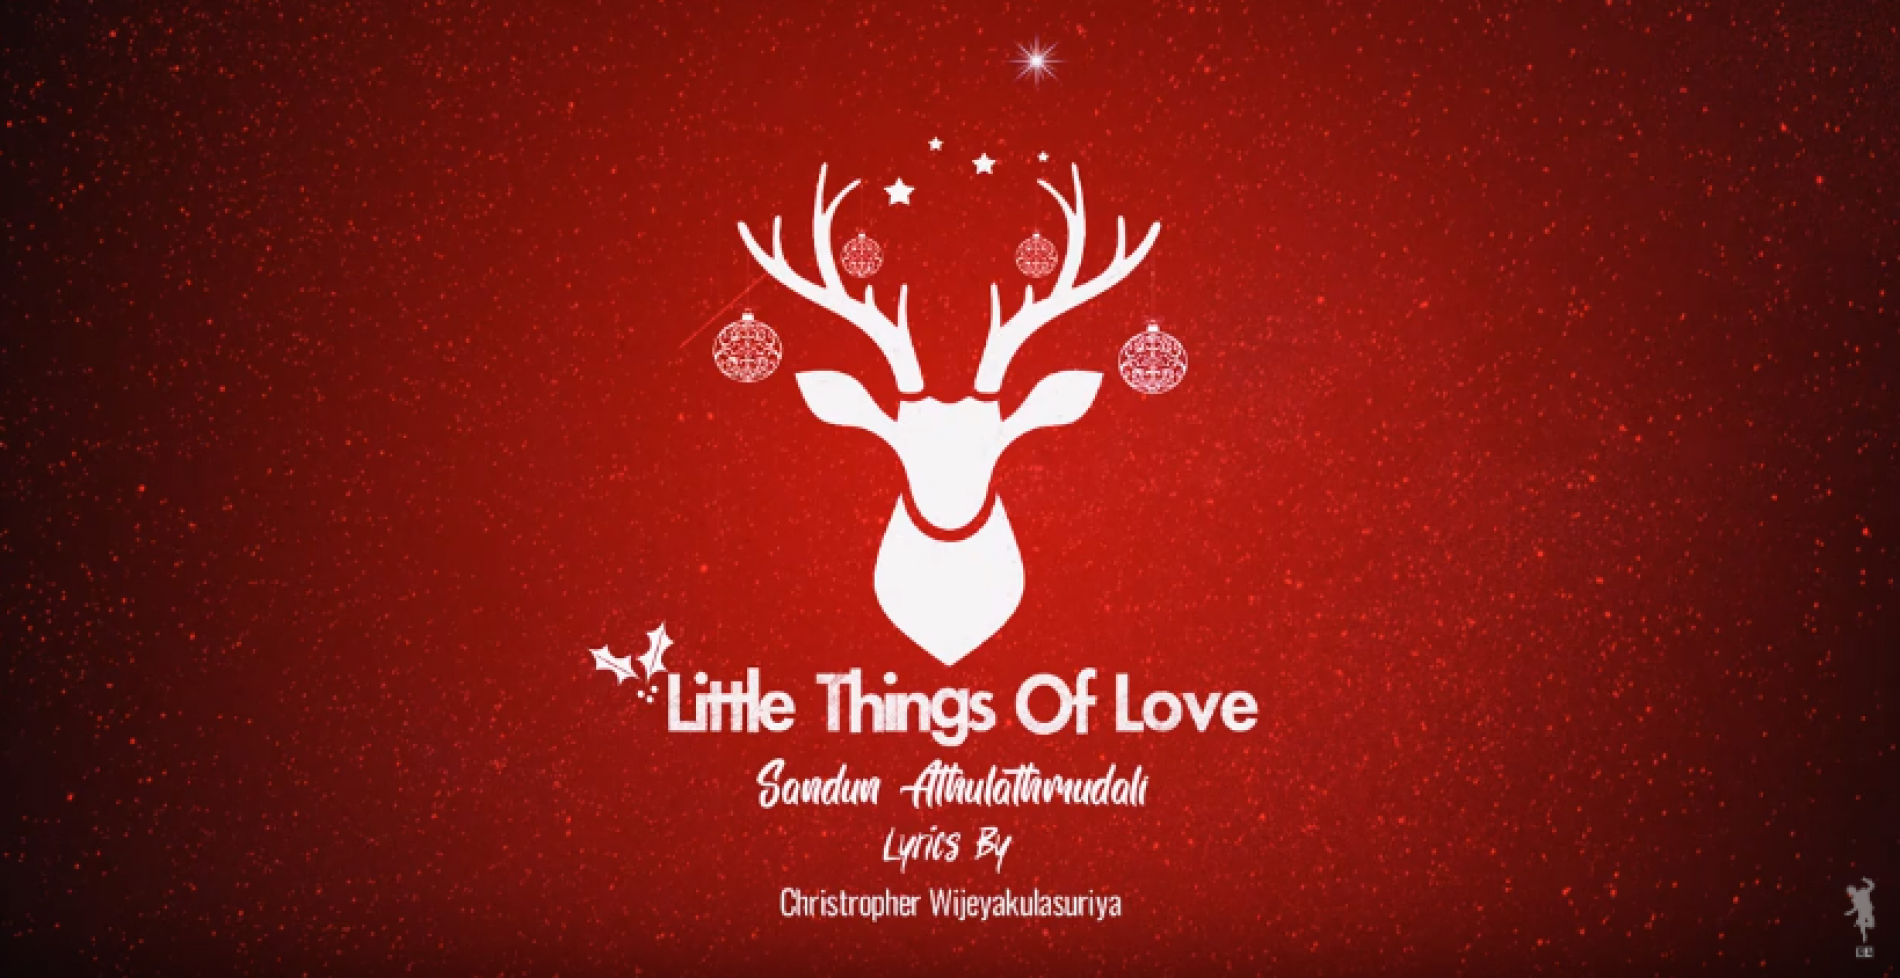 Sandun Athulathmudali – “Little Things Of Love” Official Audio